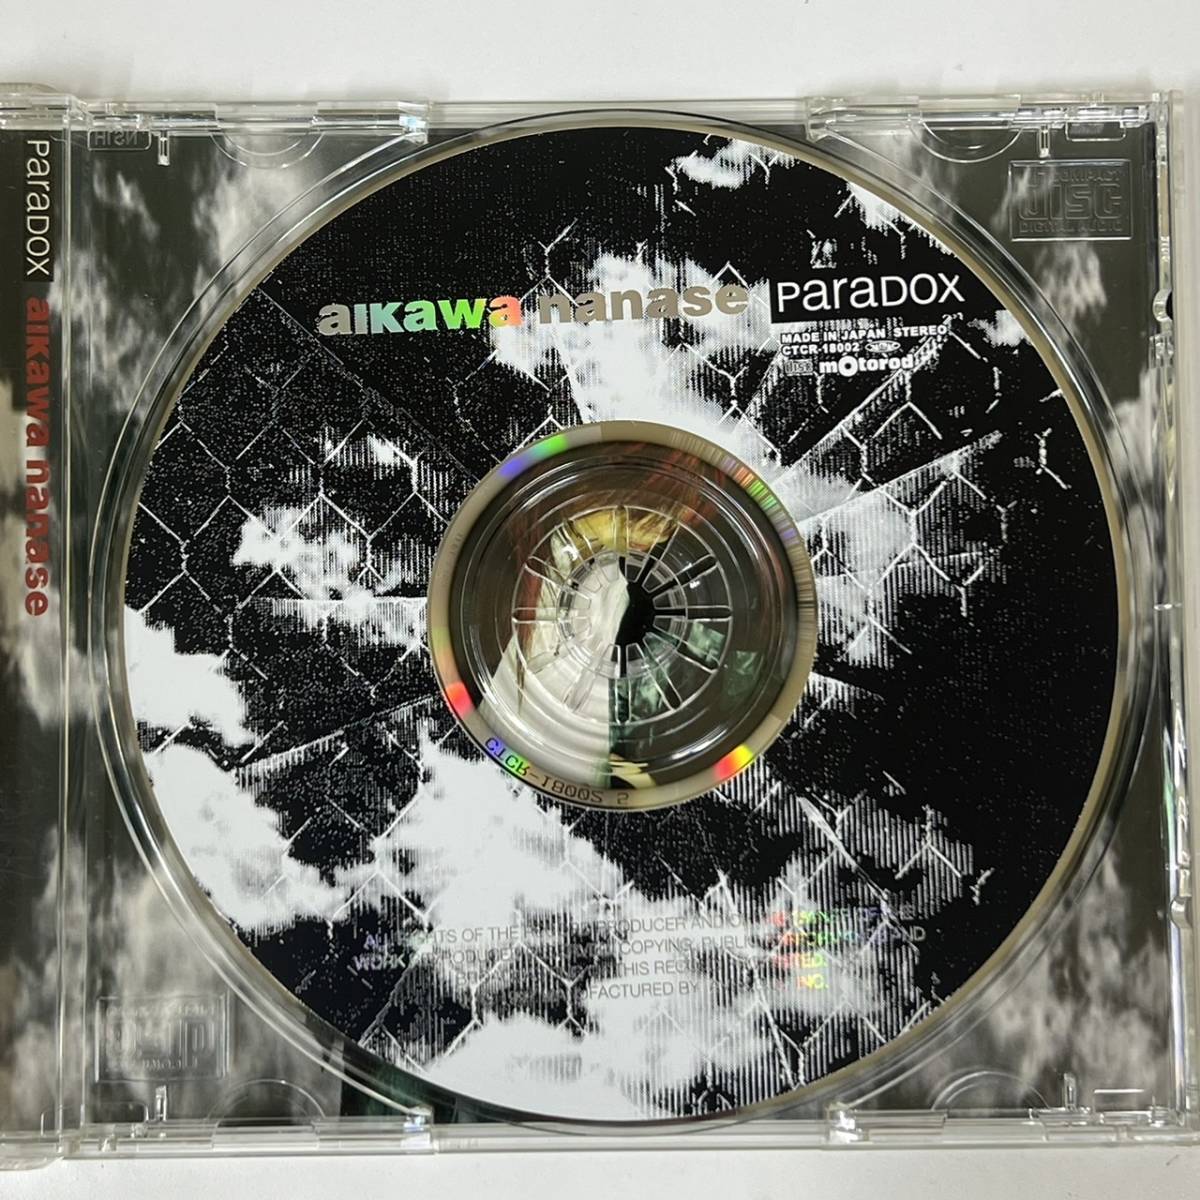 ** очень редкий ** Aikawa Nanase CD альбом ** ParaDox alkawa nanase ** HD-444